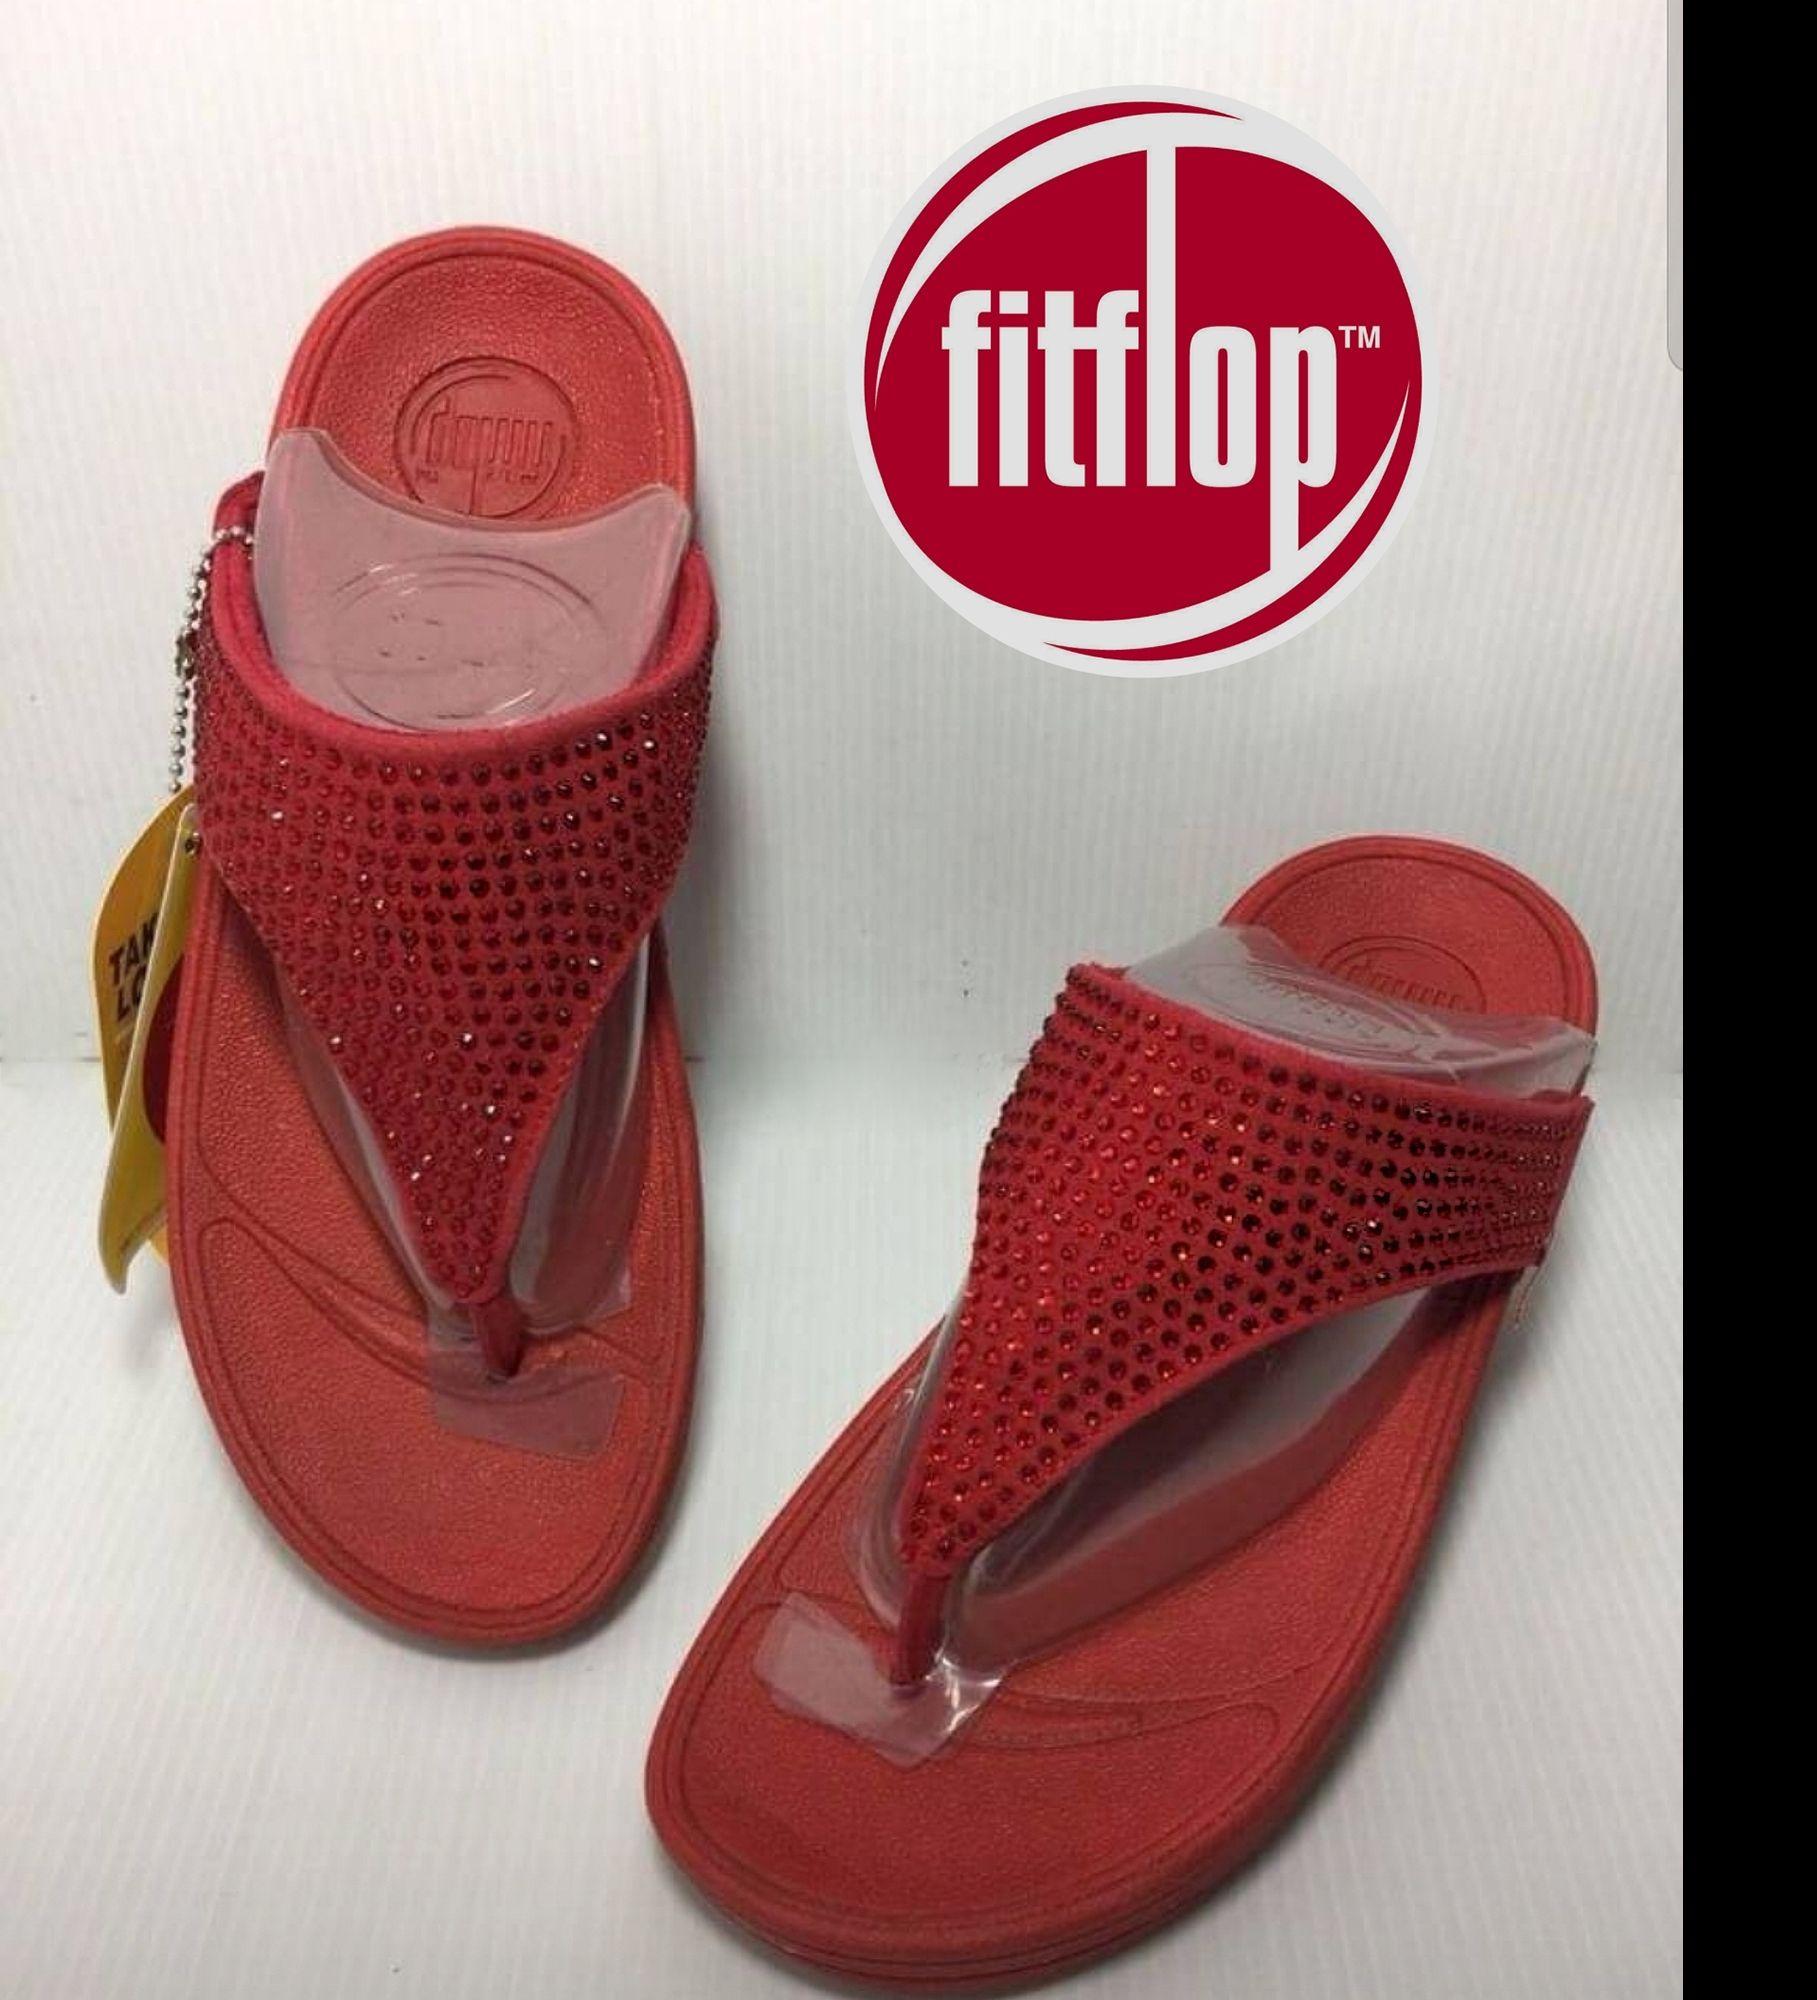 FitFlop Rokkit รองเท้าเพื่อสุขภาพ ช่วยลดแรงกระแทก และบรรเทาอาการปวดได้อย่าวดีเยี่ยม